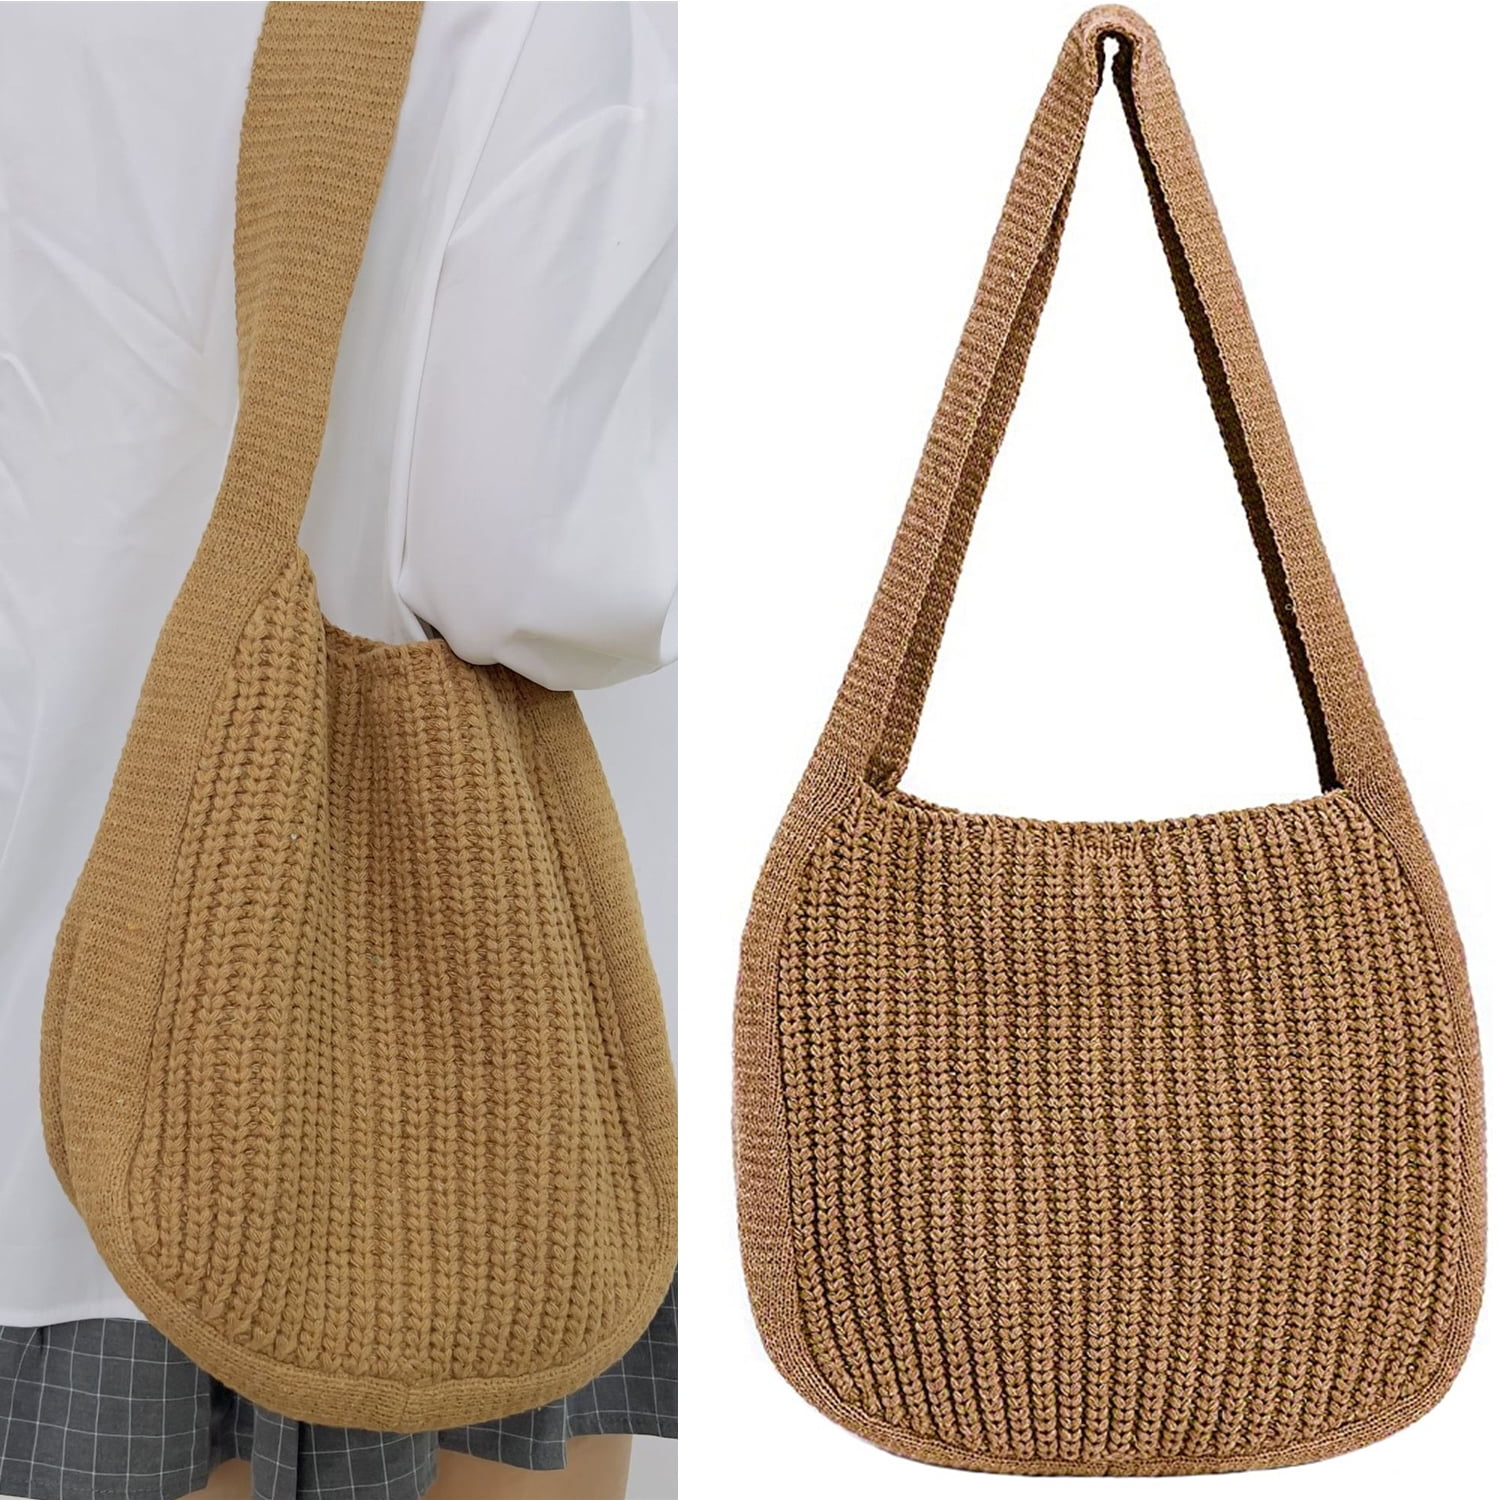 Banjara clutch boho bags bohemian bags handmade boho bags. | eBay